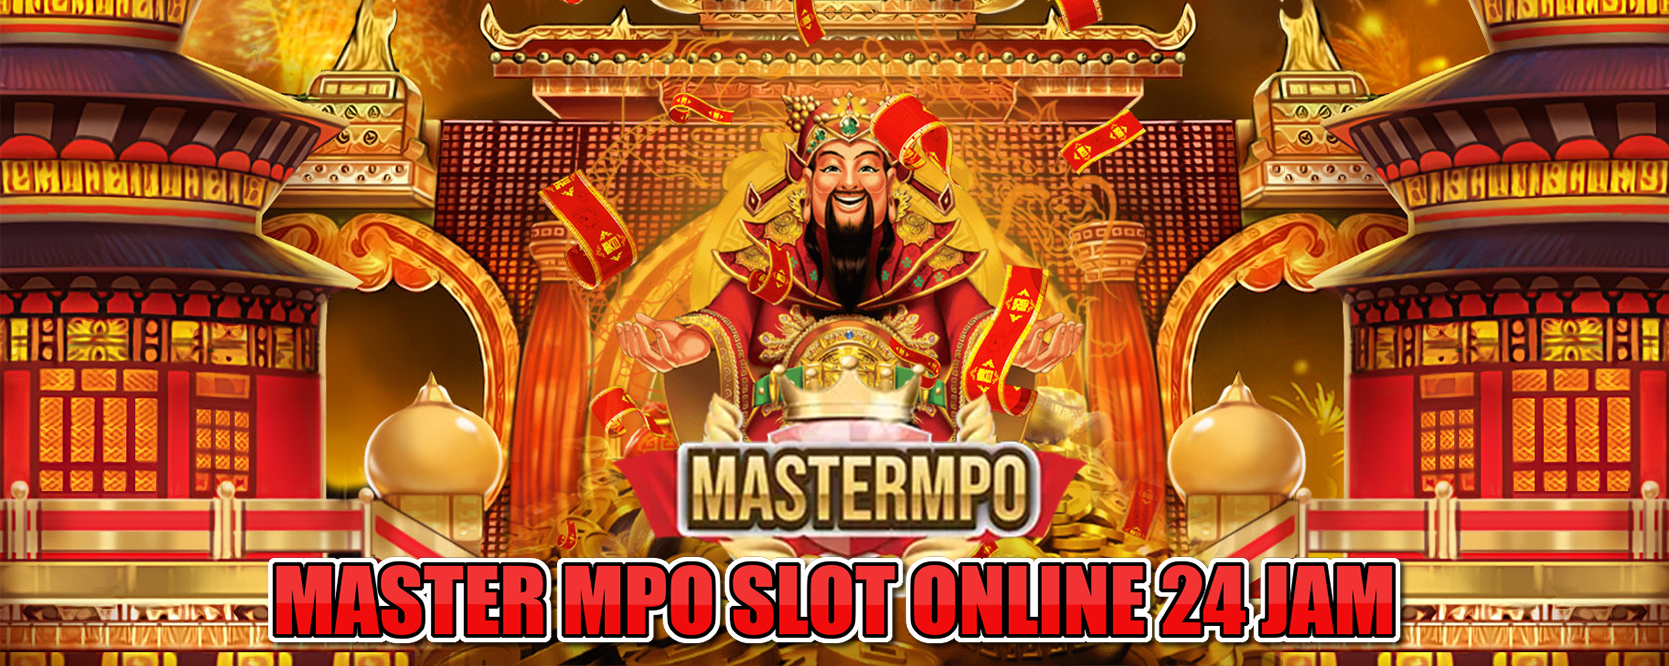 Situs Joker Mpo Online Slot Minimal Deposit 10 Ribu Via Go-pay Terpercaya